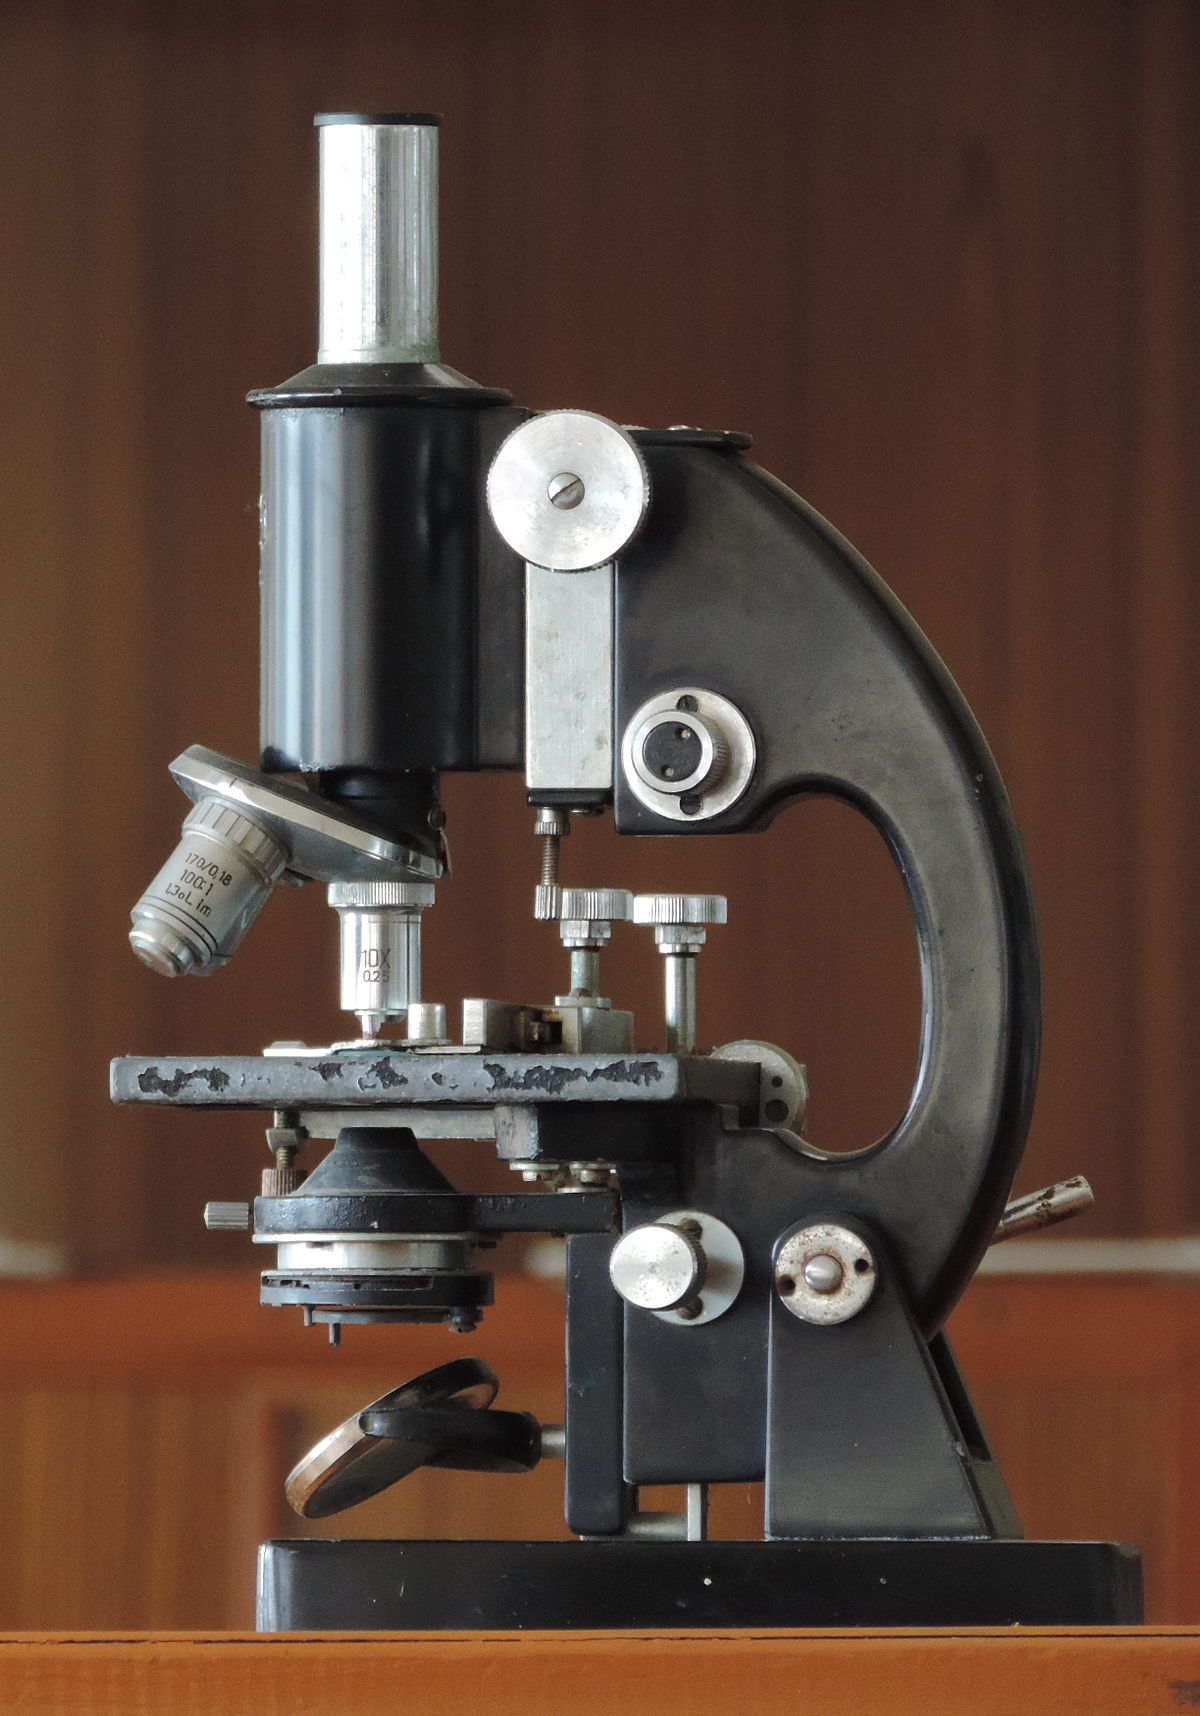 Microscope photo